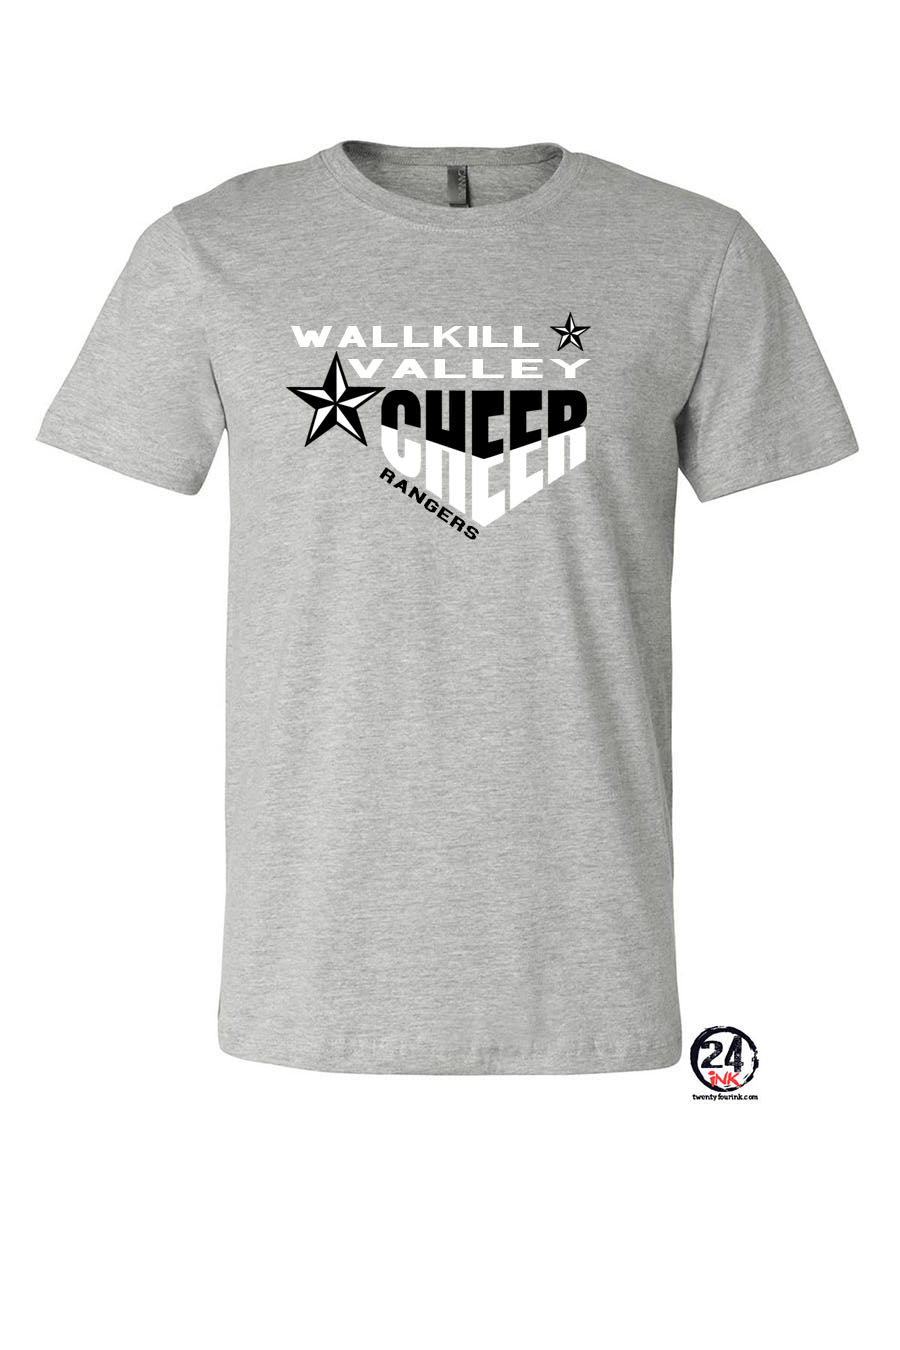 Wallkill Cheer design 5 T-Shirt